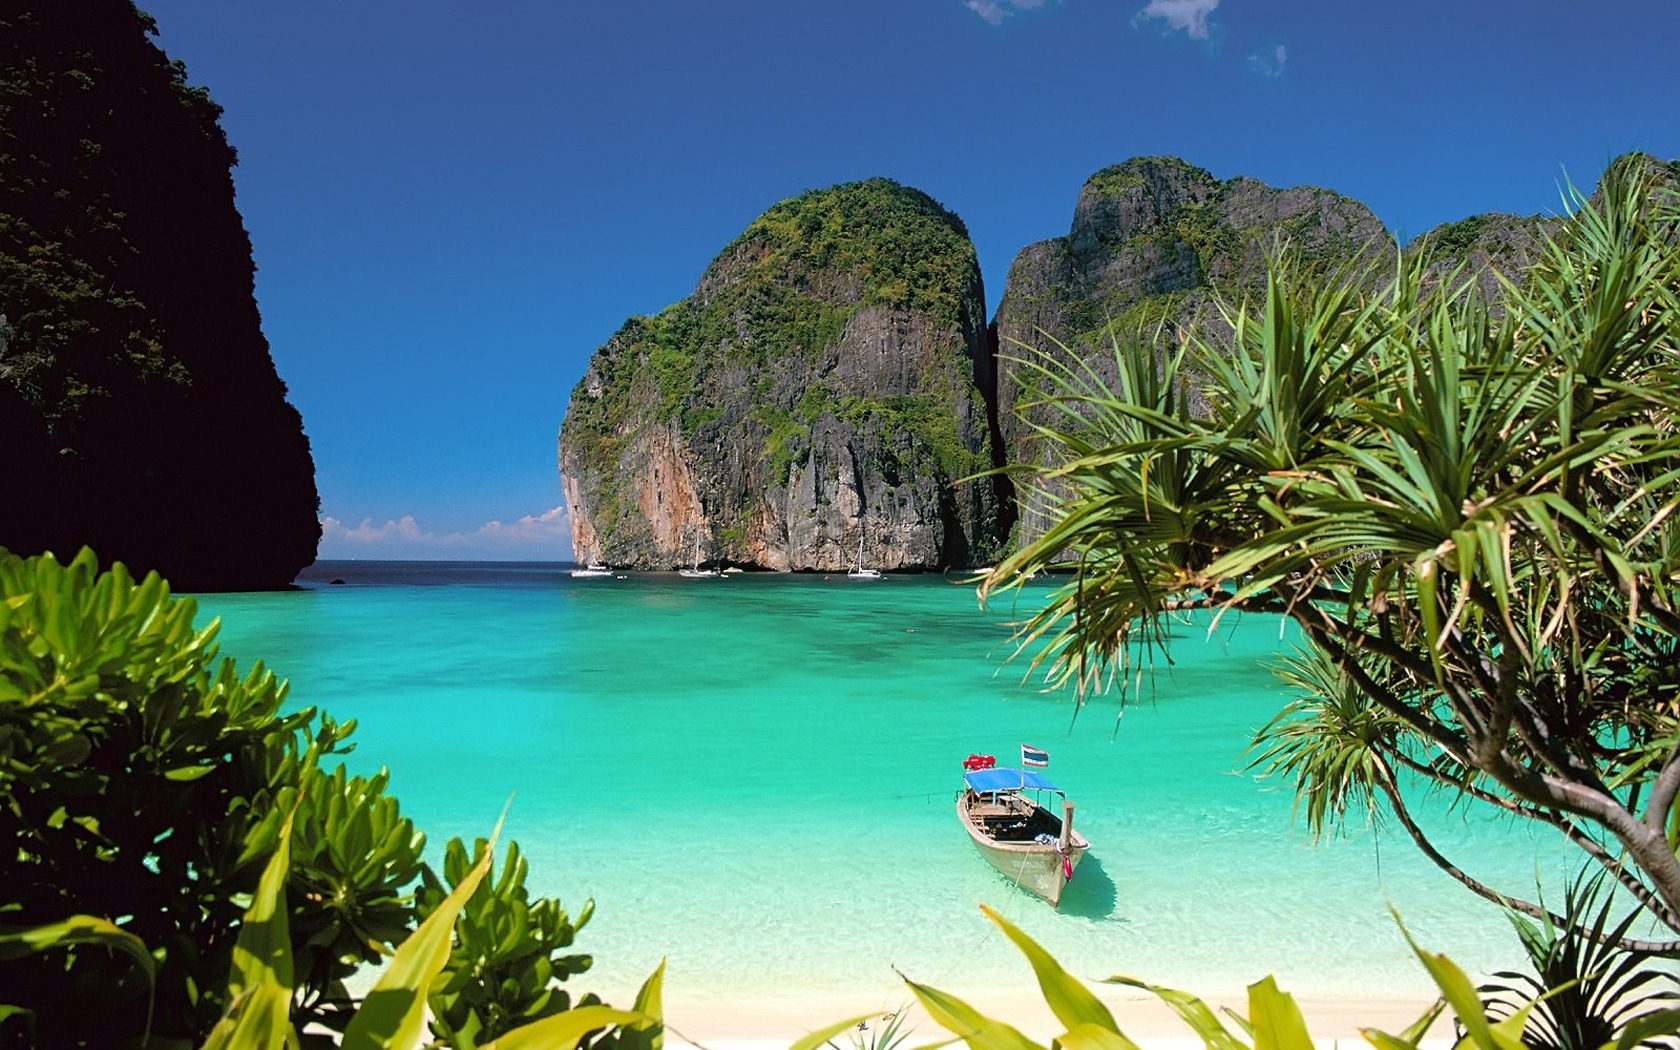 InnViaggi: Tour Operator in Thailandia e Asia. 